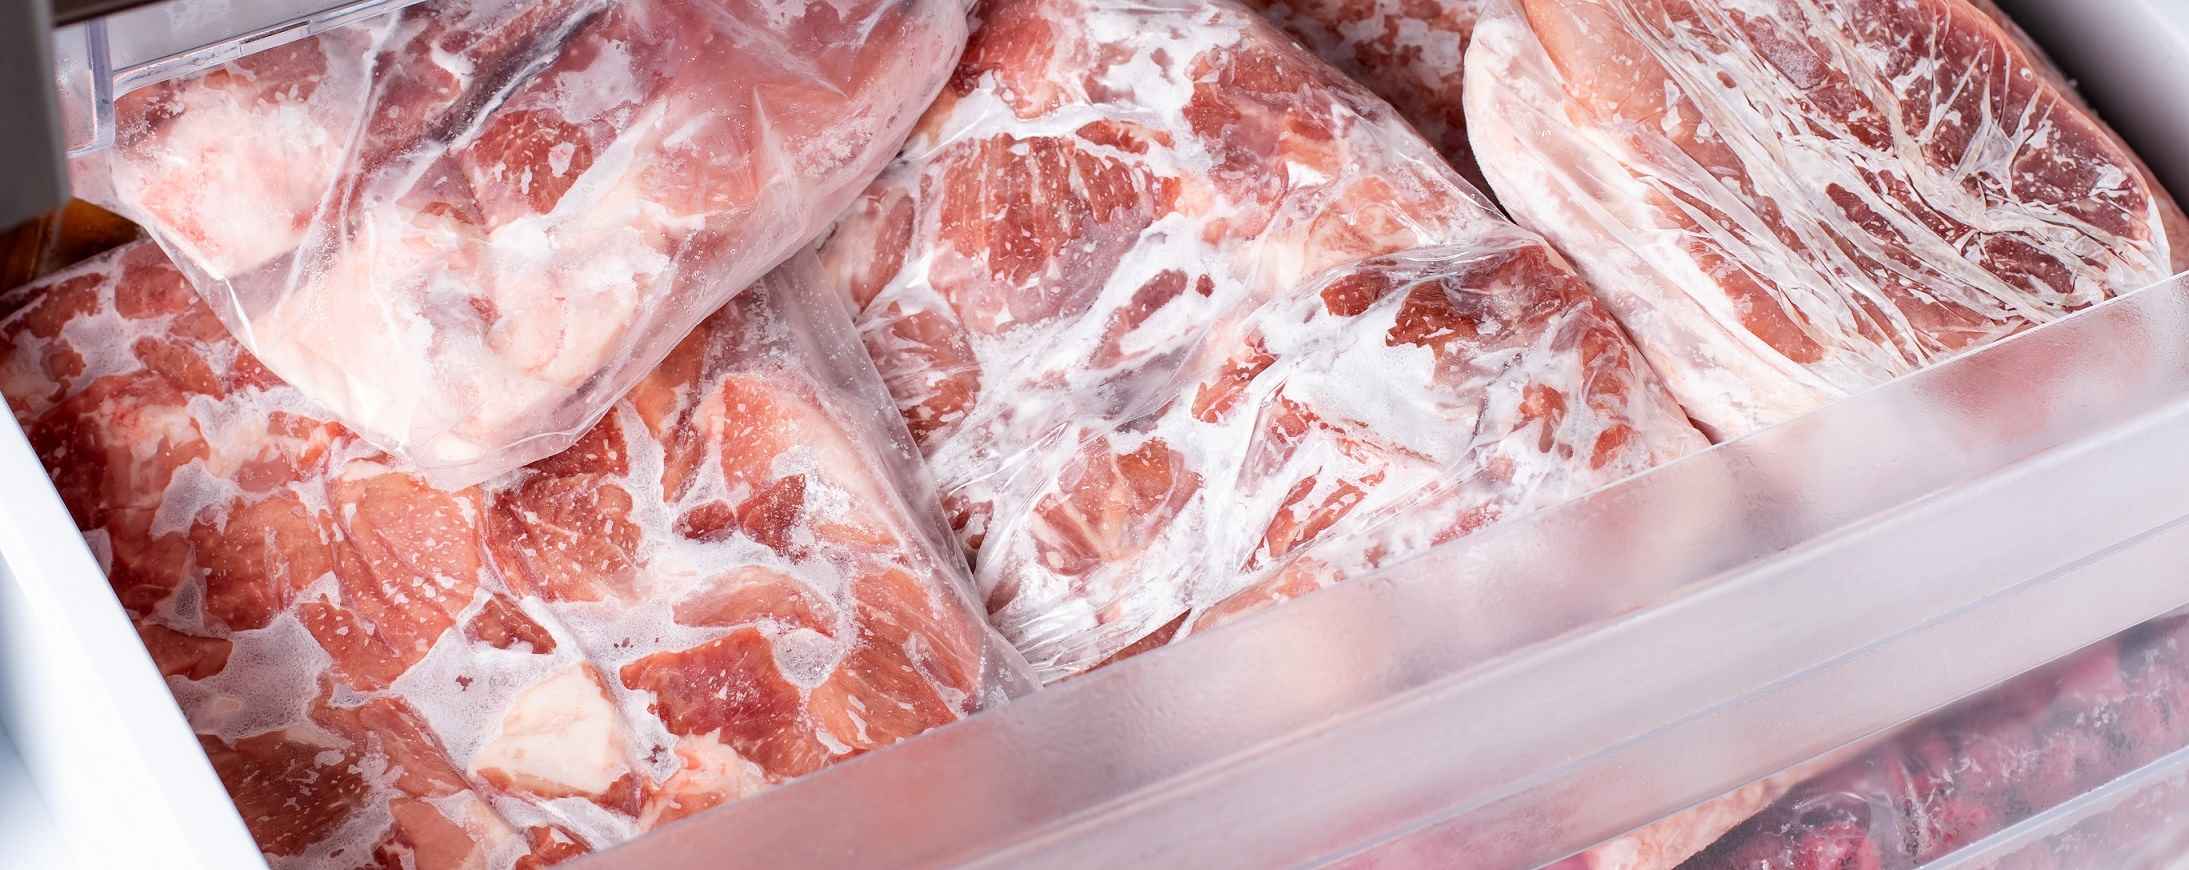 Raw frozen meat in the freezer in bags